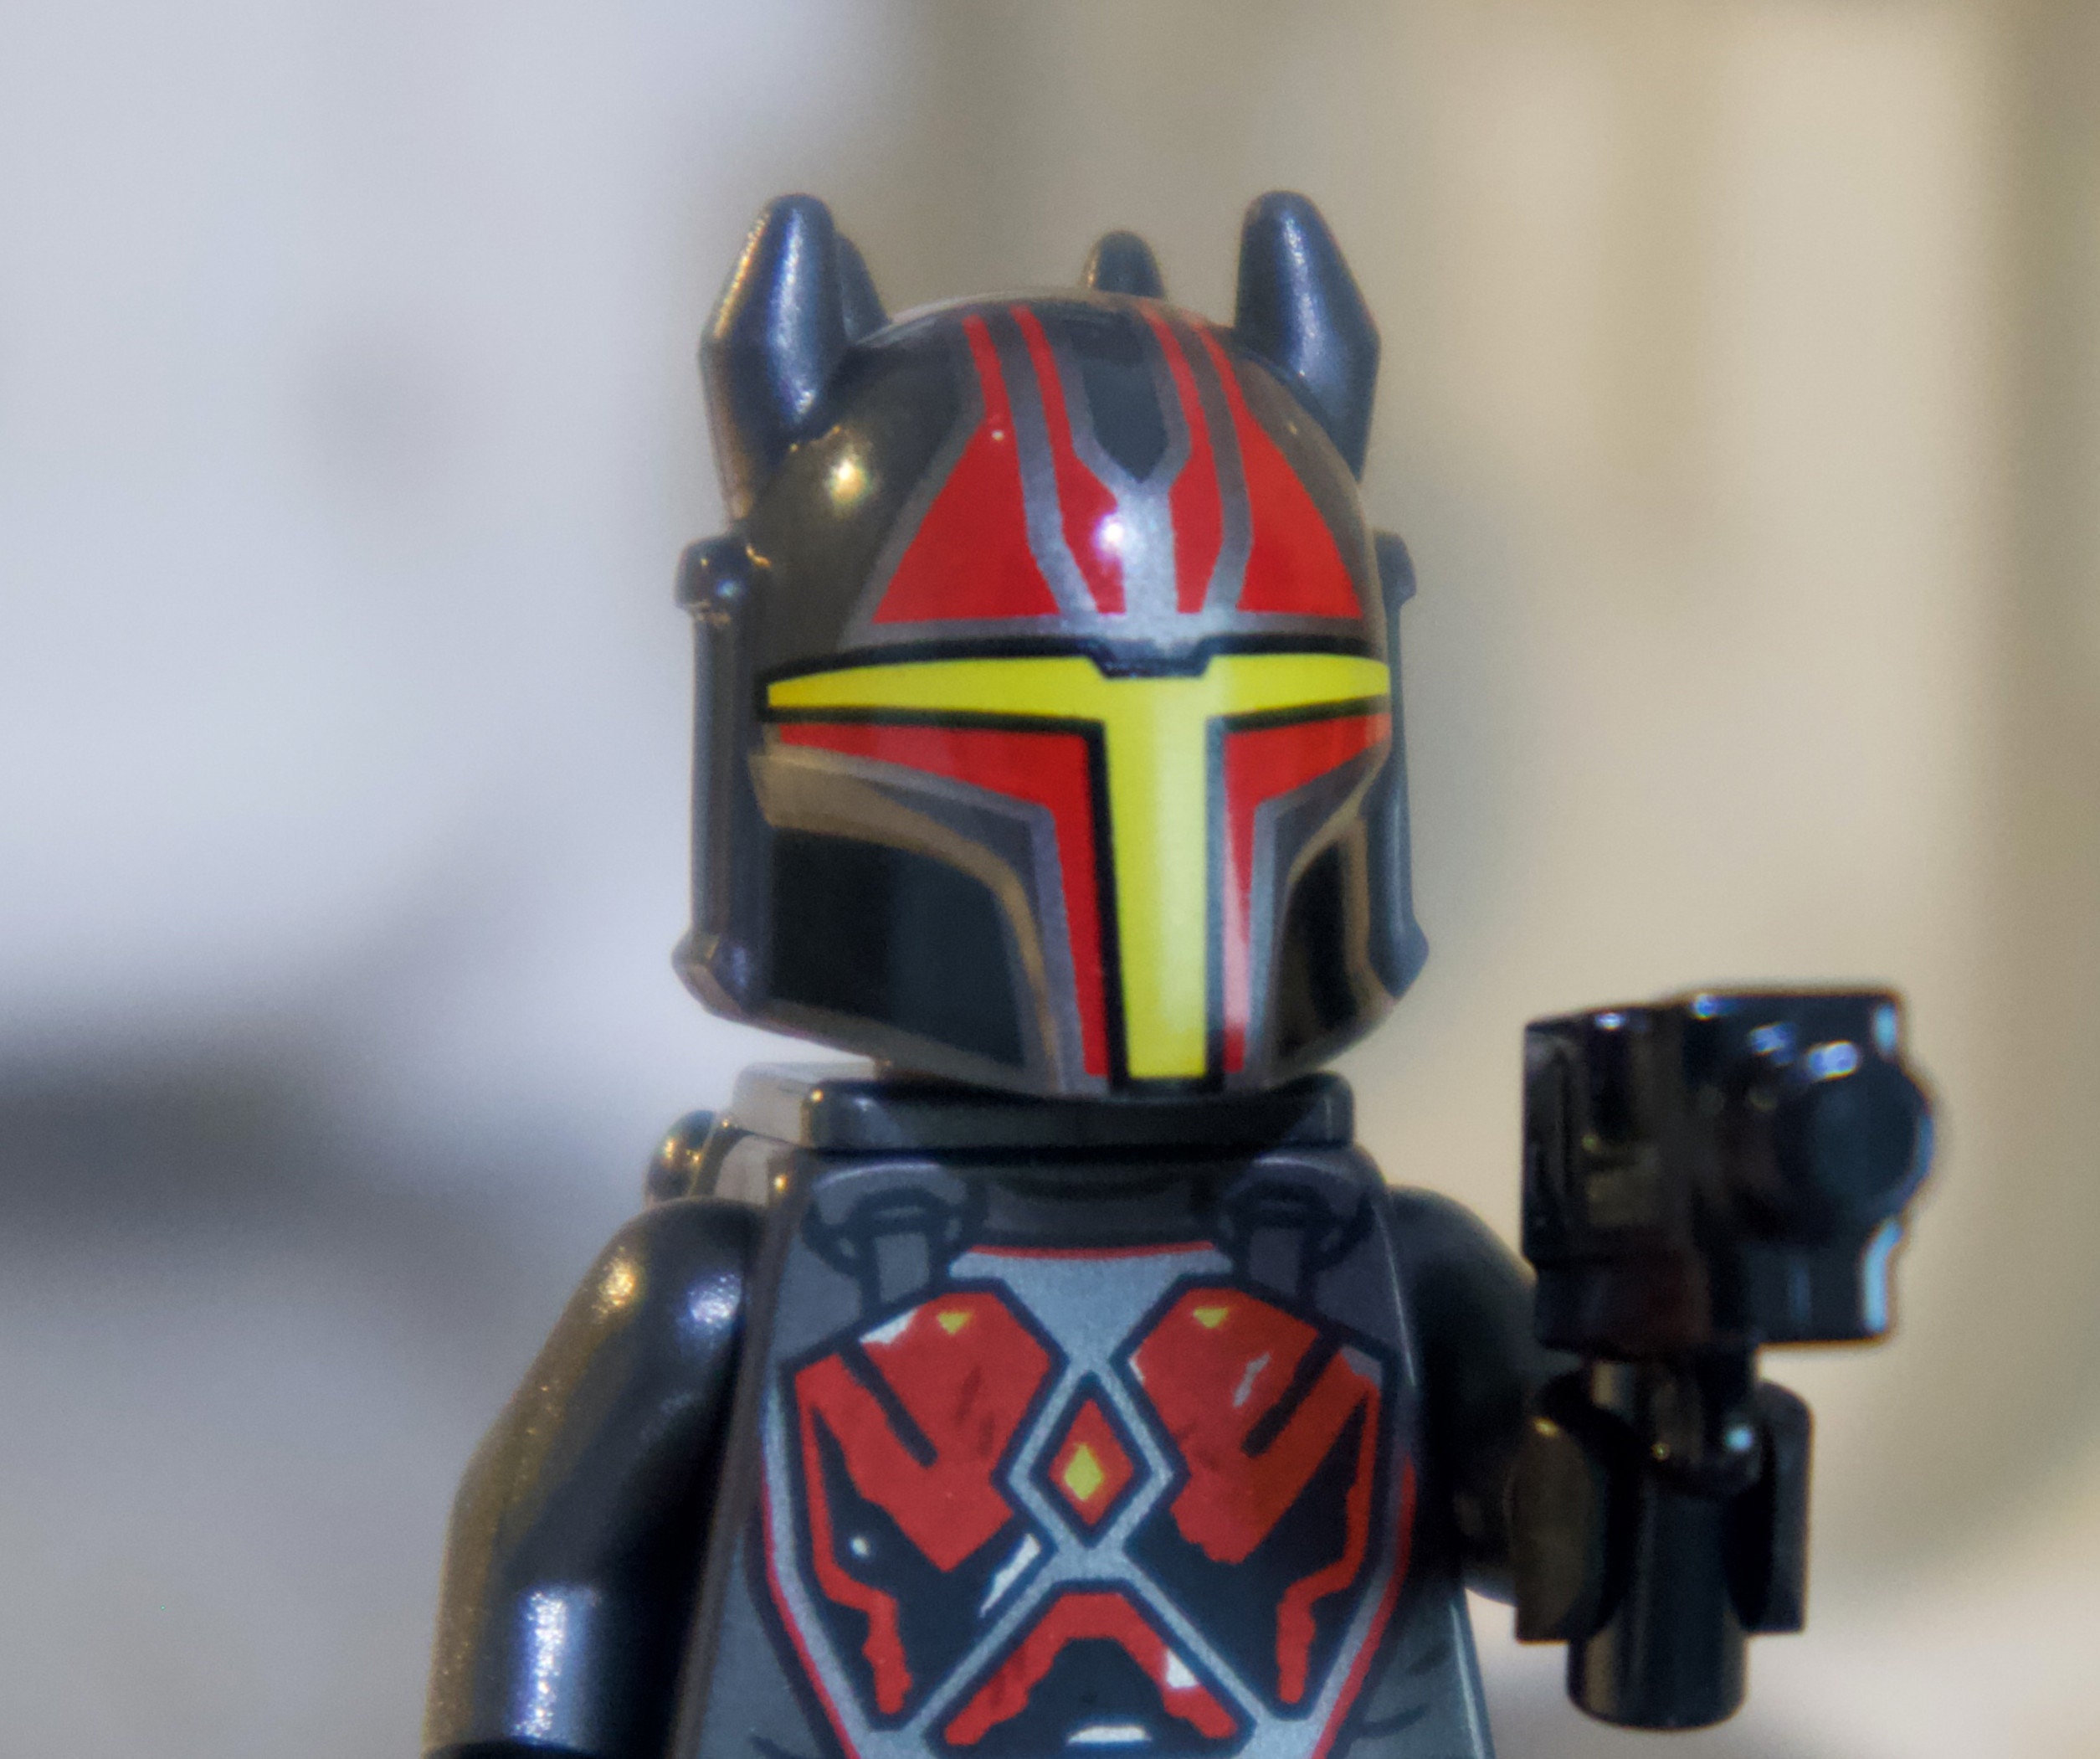 Custom Star Wars minifigures Gar Saxon S7 v2 on lego brand bricks 